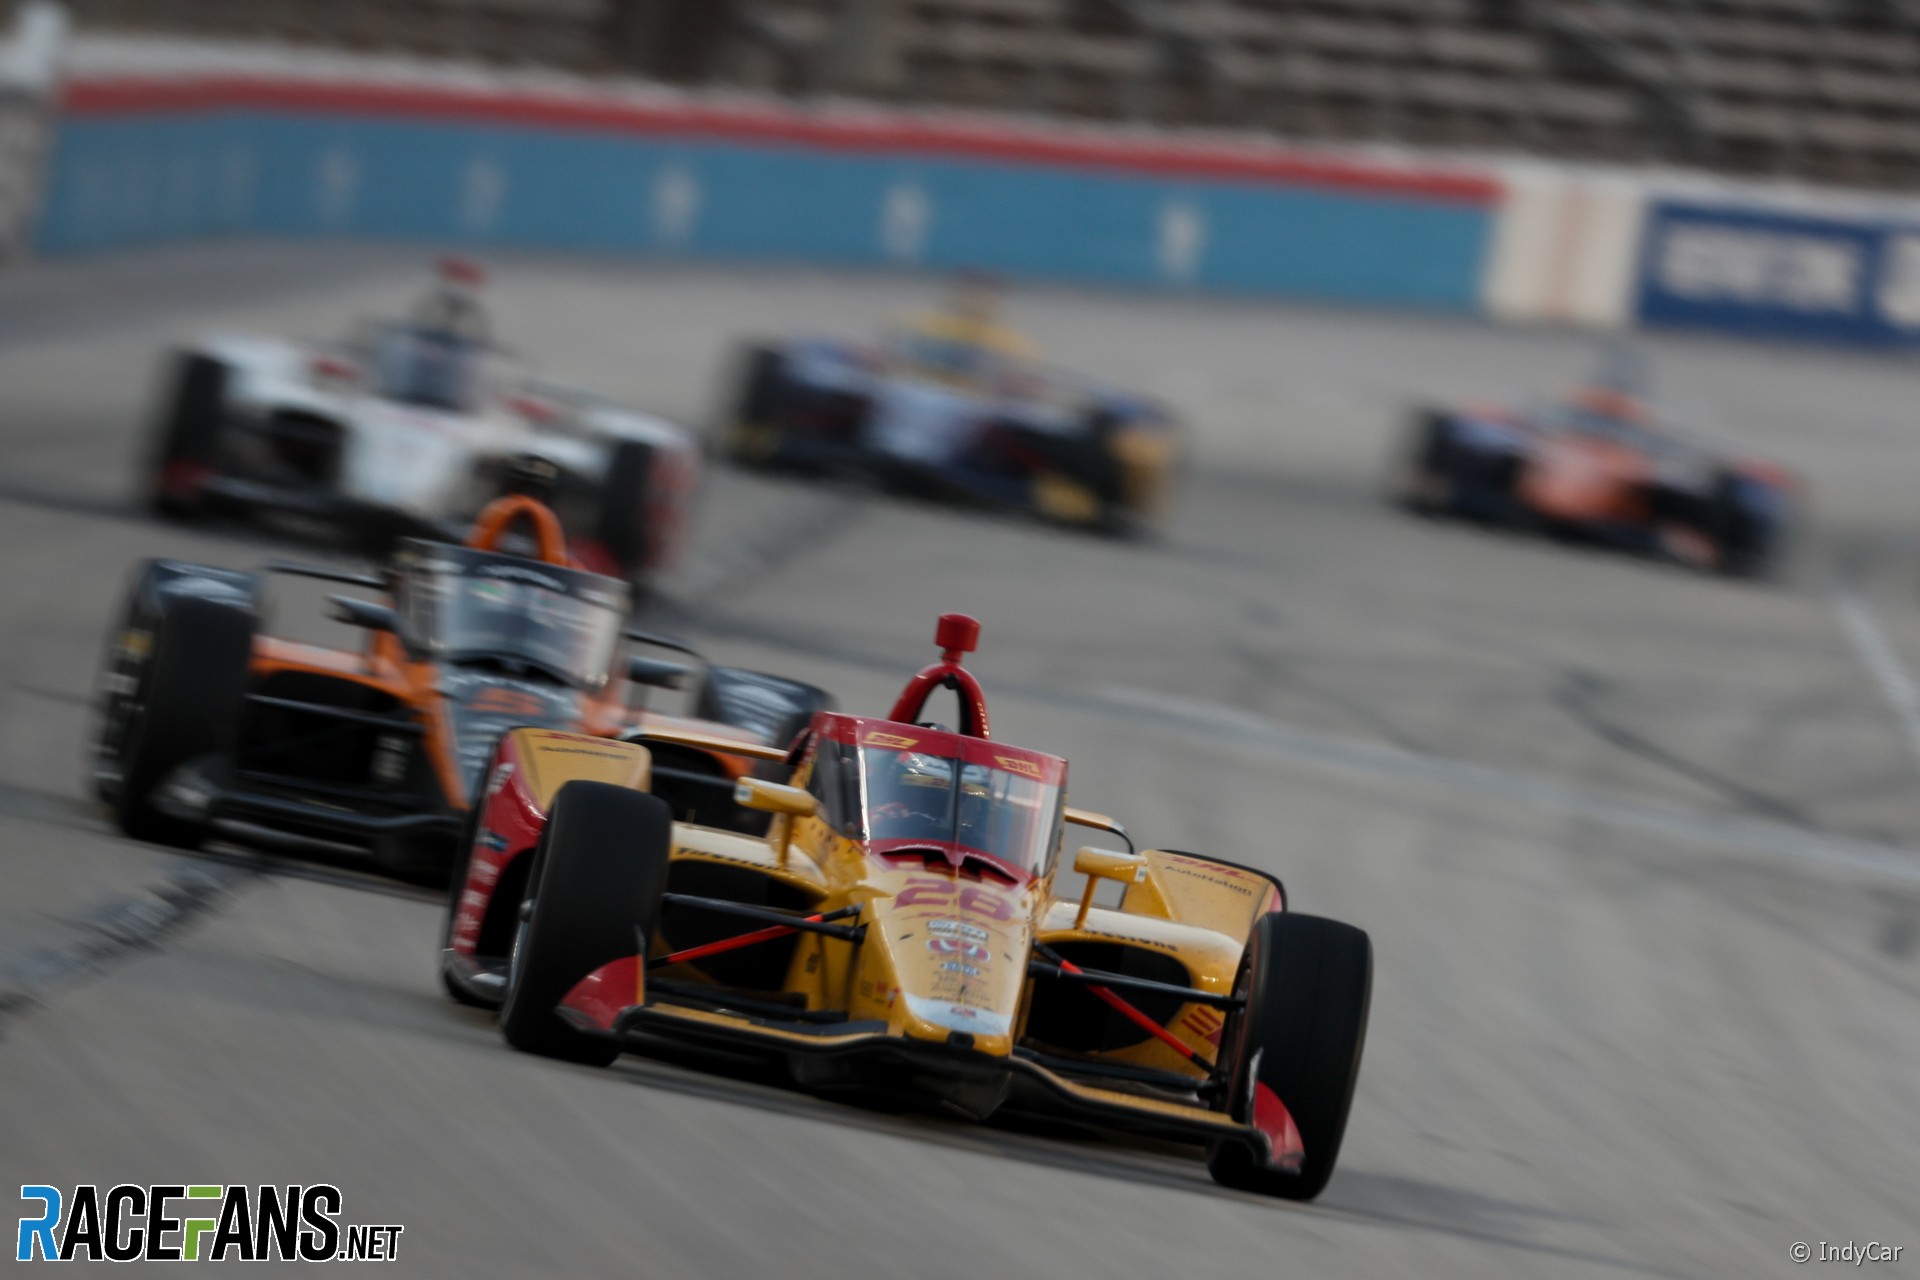 Ryan Hunter-Reay, Andretti, IndyCar, Texas Motor Speedway, 2020